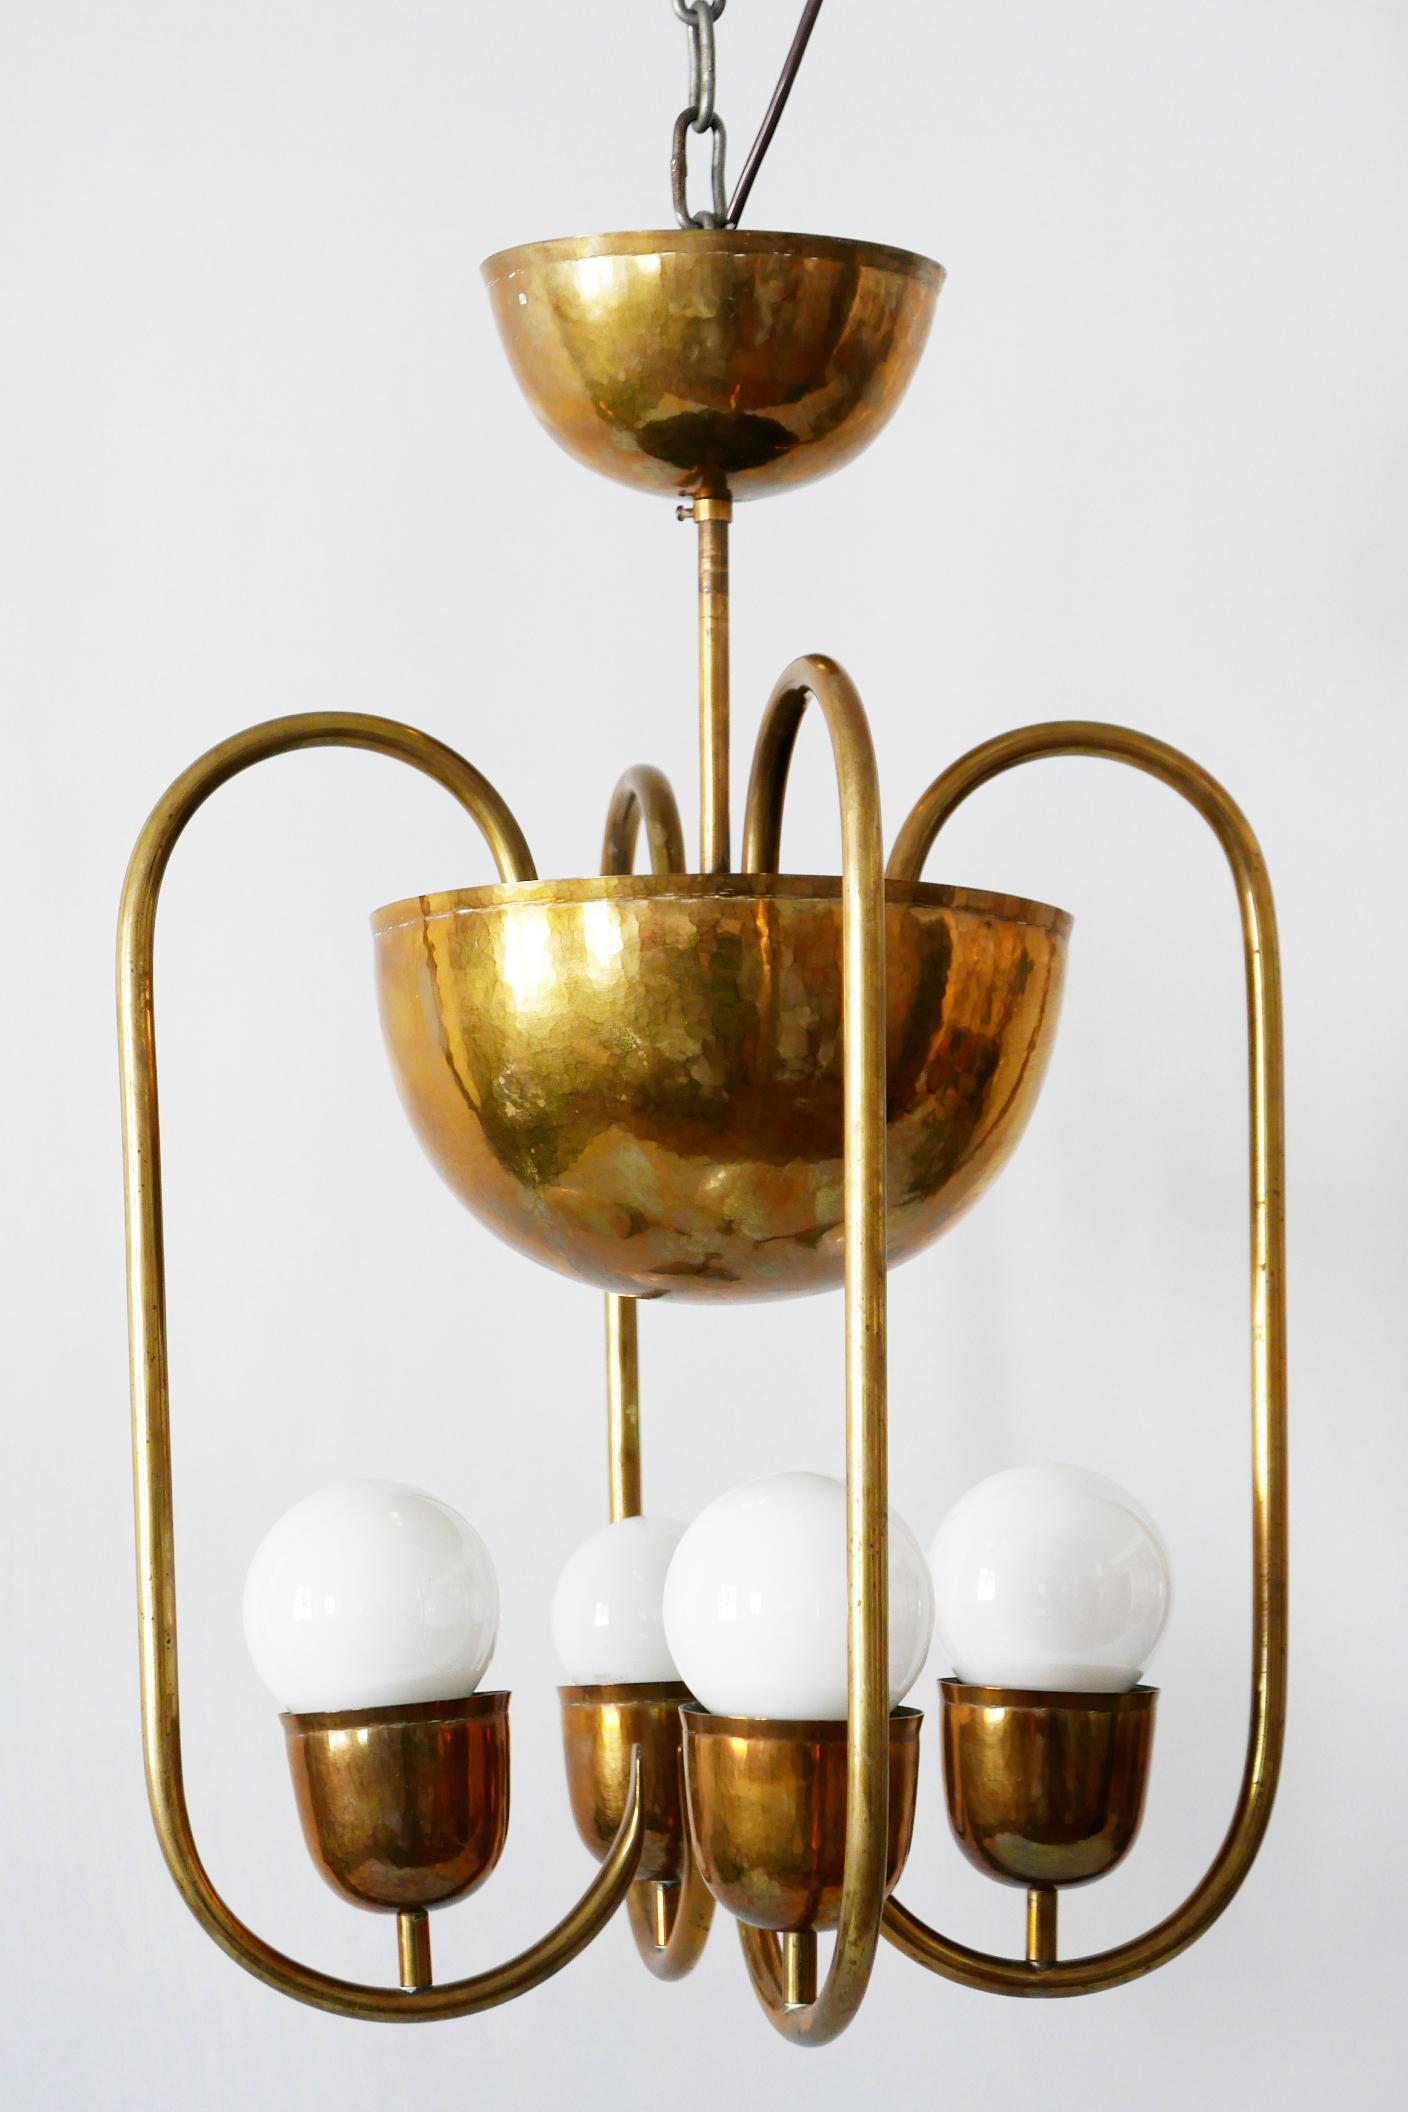 Unique Bauhaus Art Deco Brass Chandelier or Pendant Lamp by Hayno Focken 1930s In Good Condition For Sale In Munich, DE